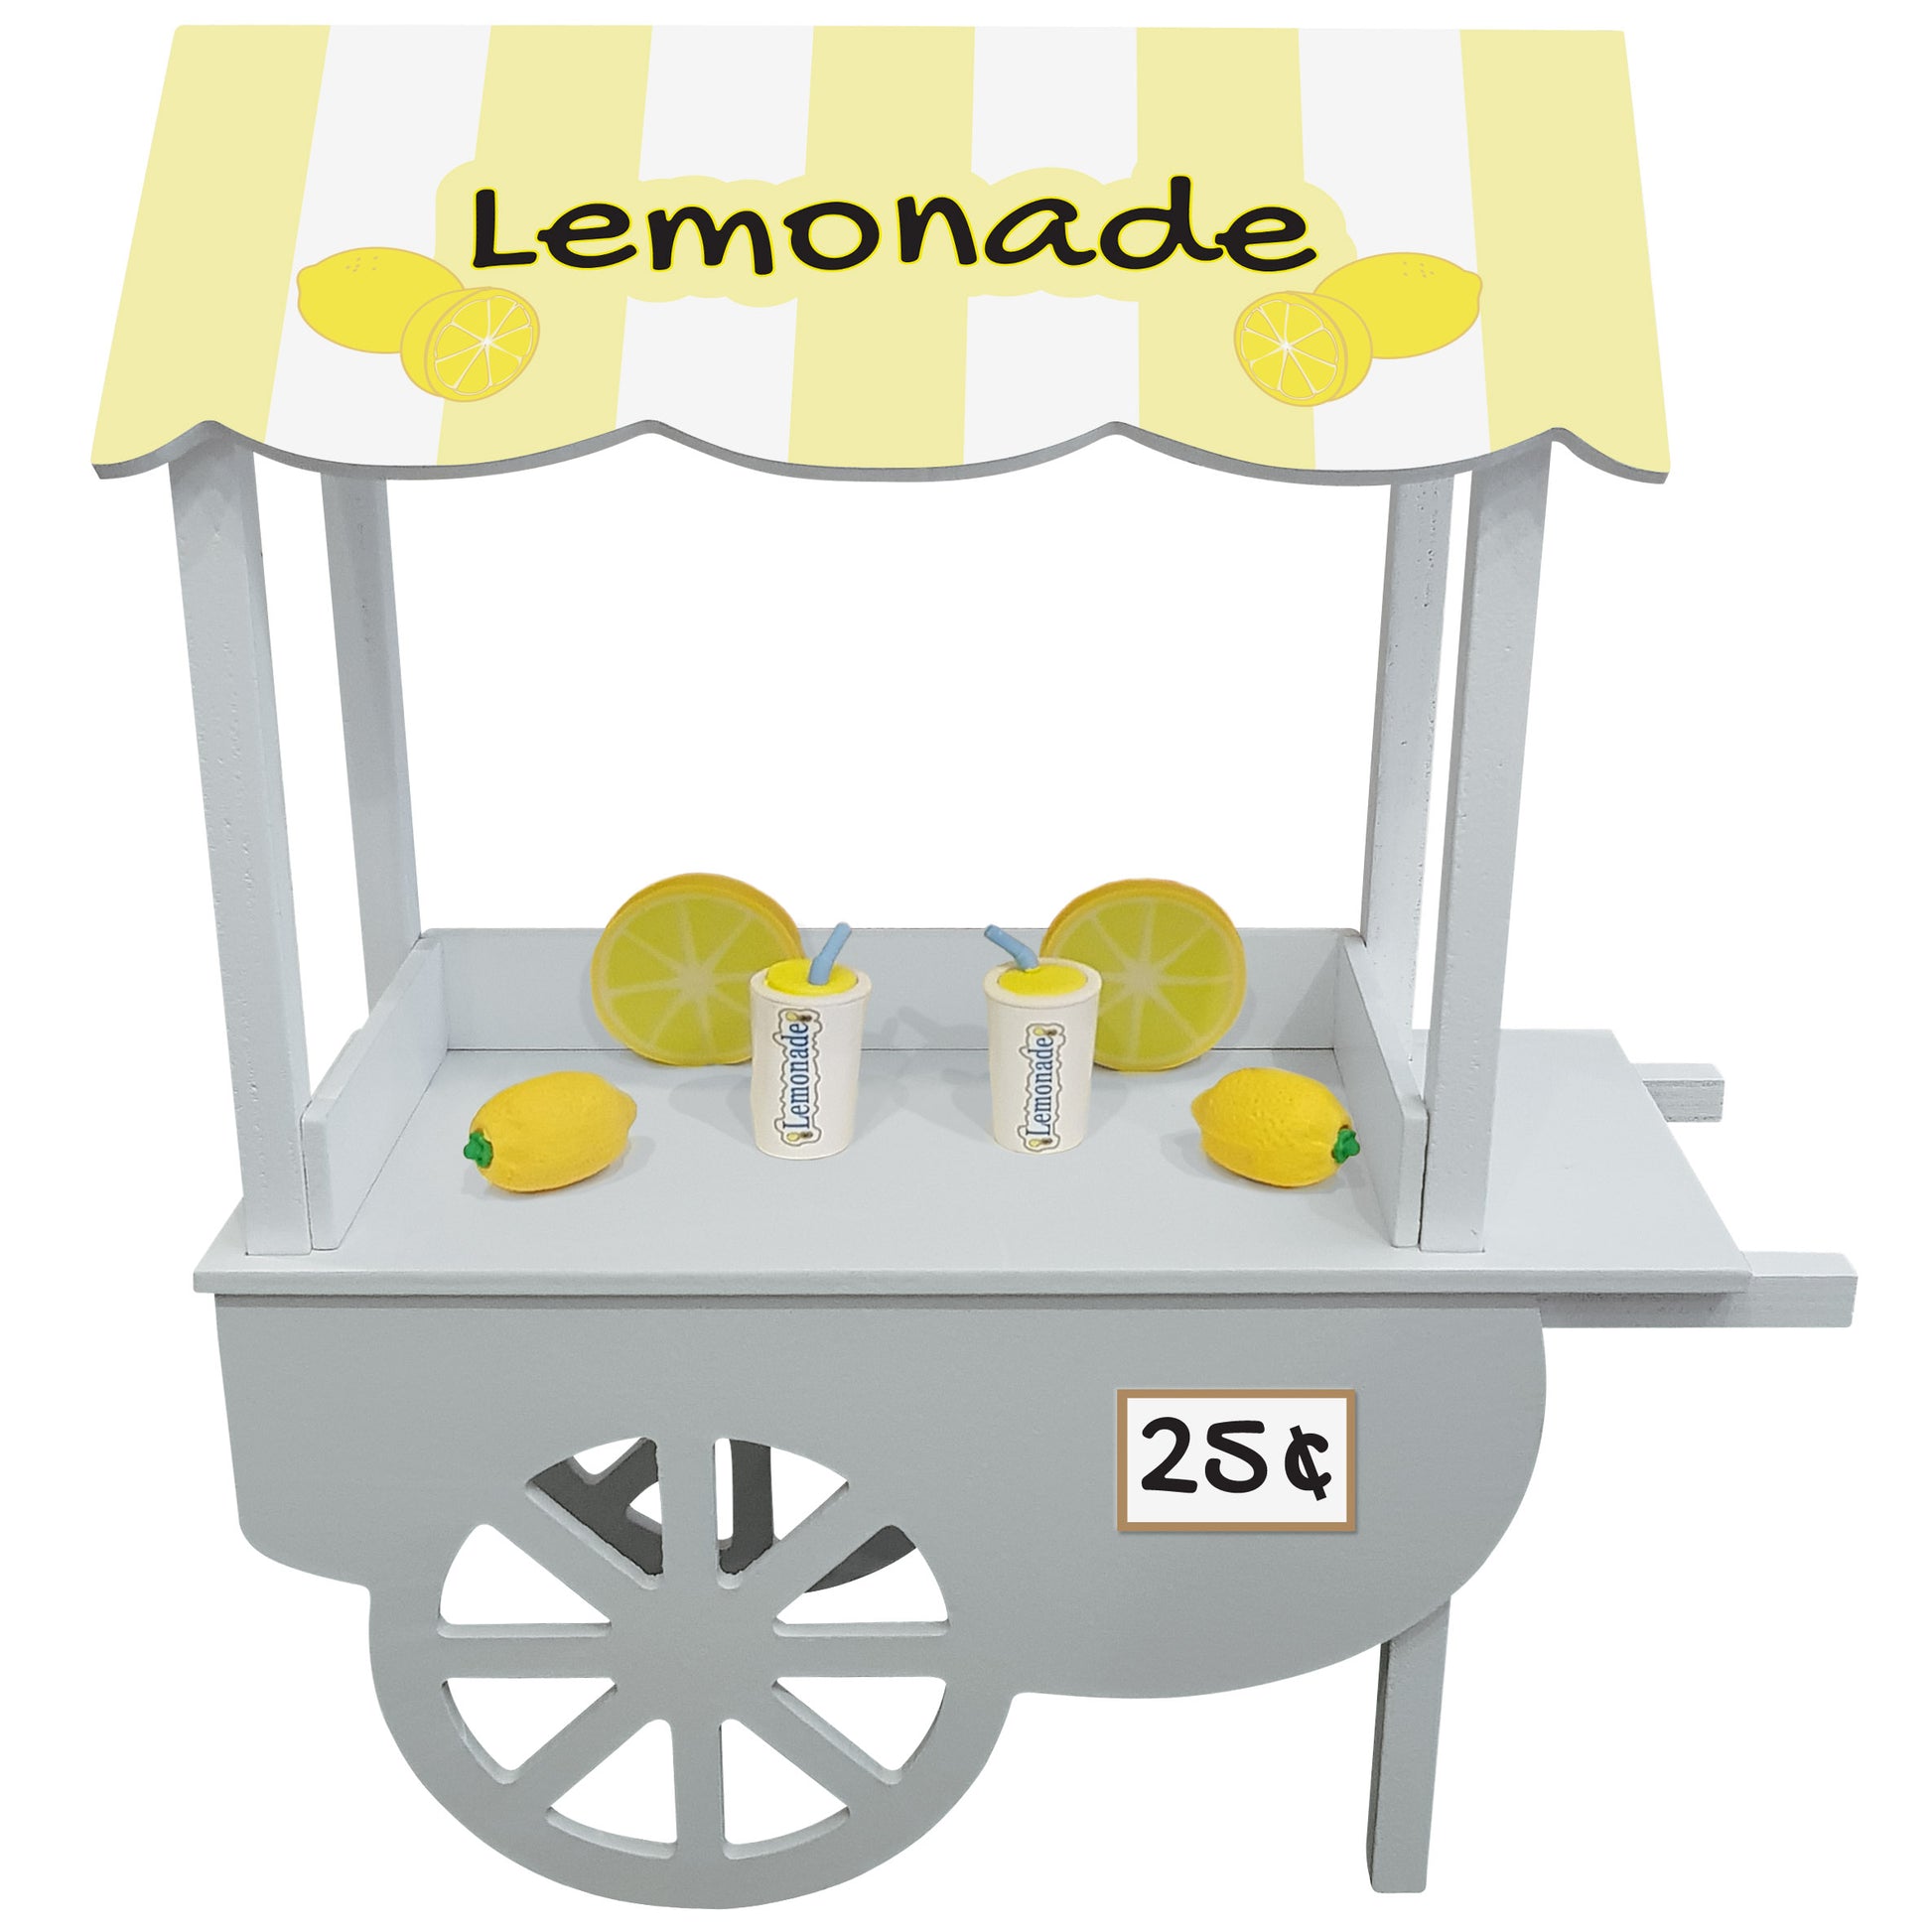 Lemonade shop for elves with miniature lemonade